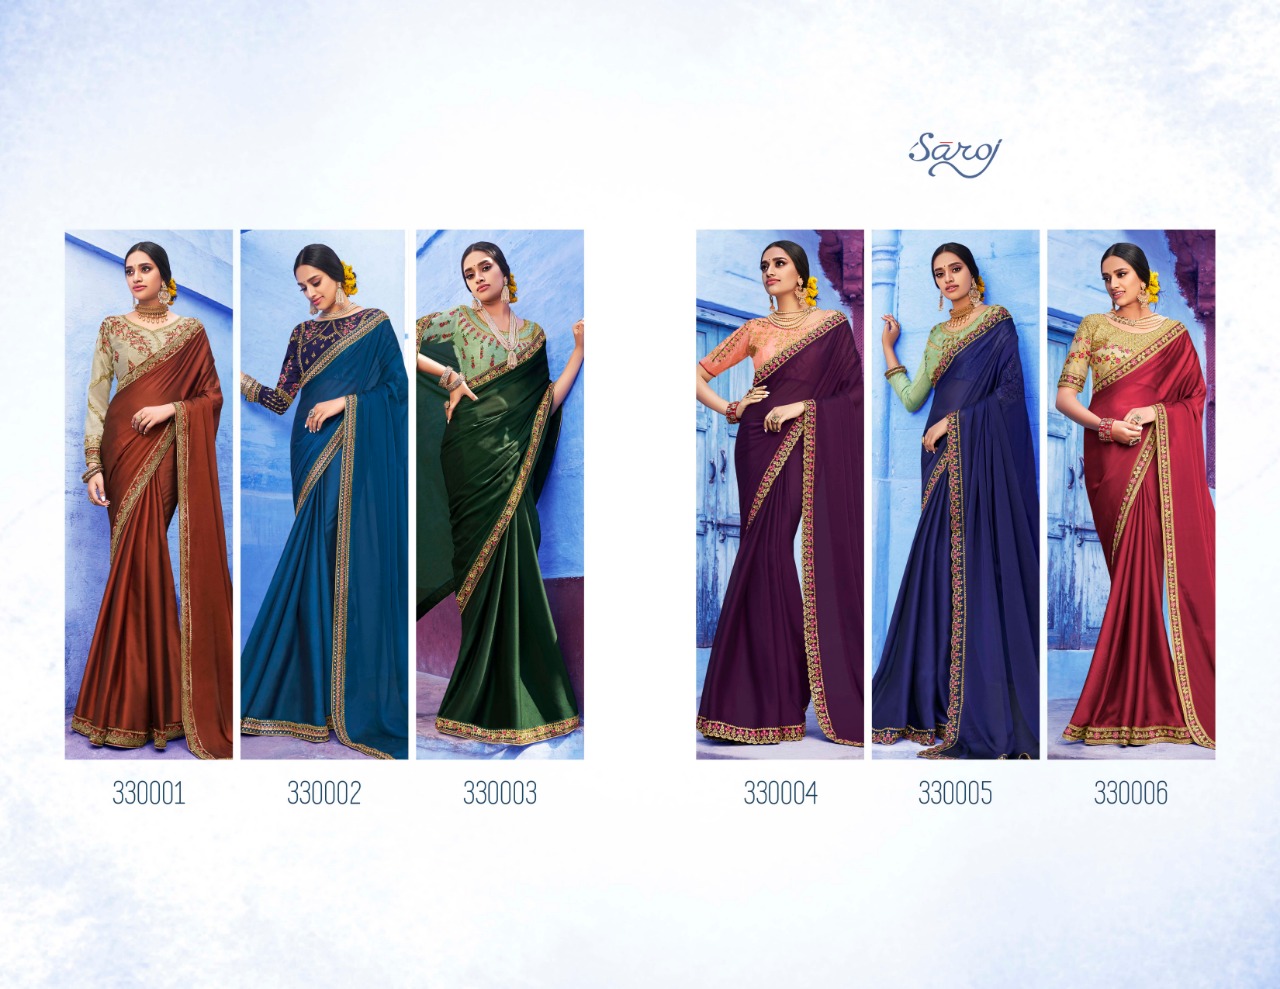 saroj vasundhara fancy colorful collection of sarees